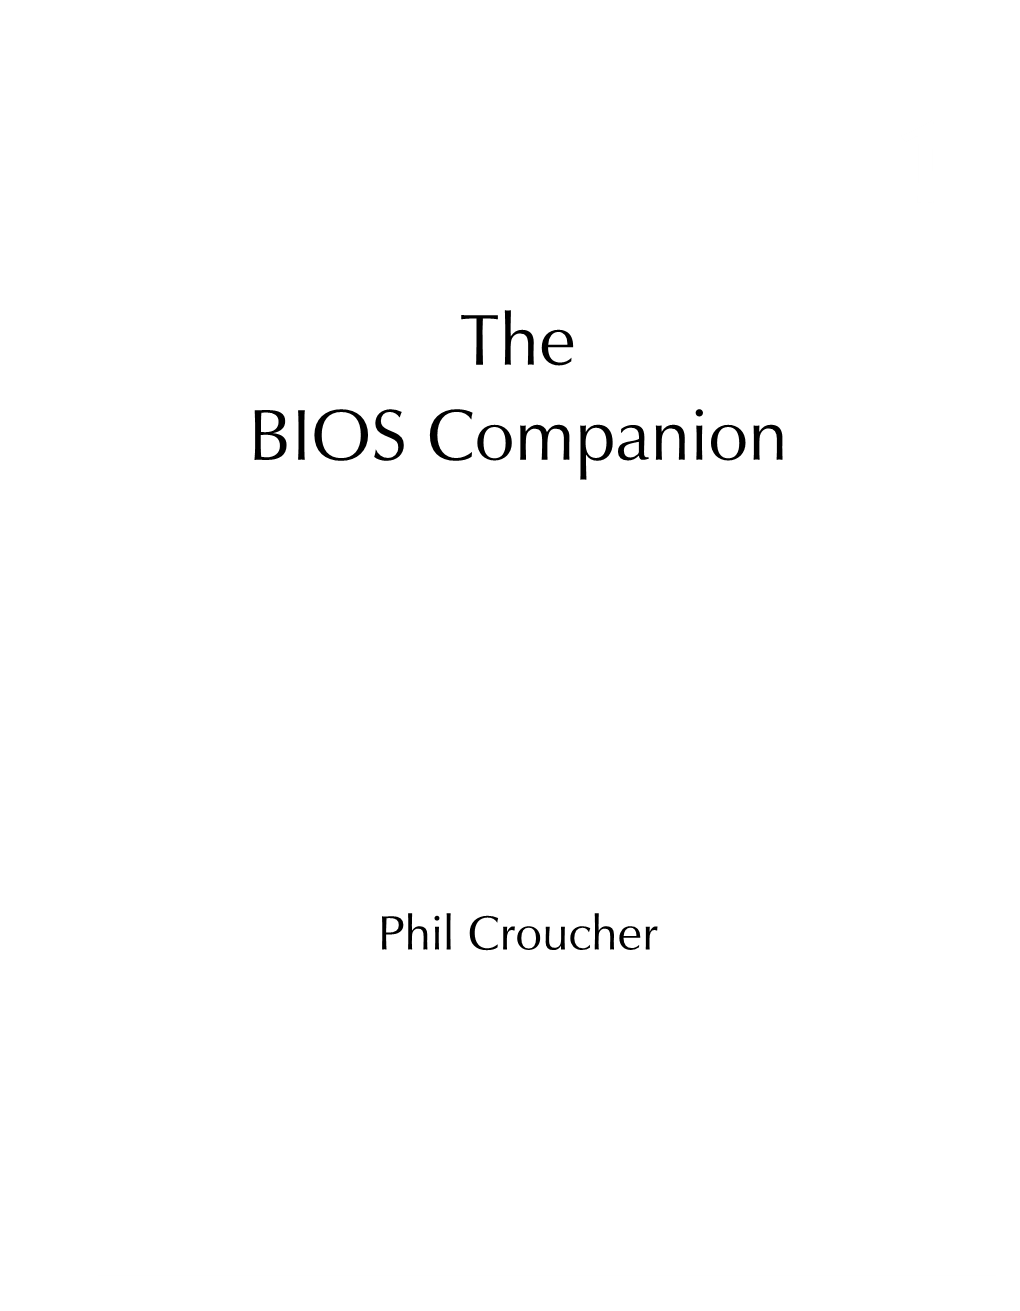 The BIOS Companion